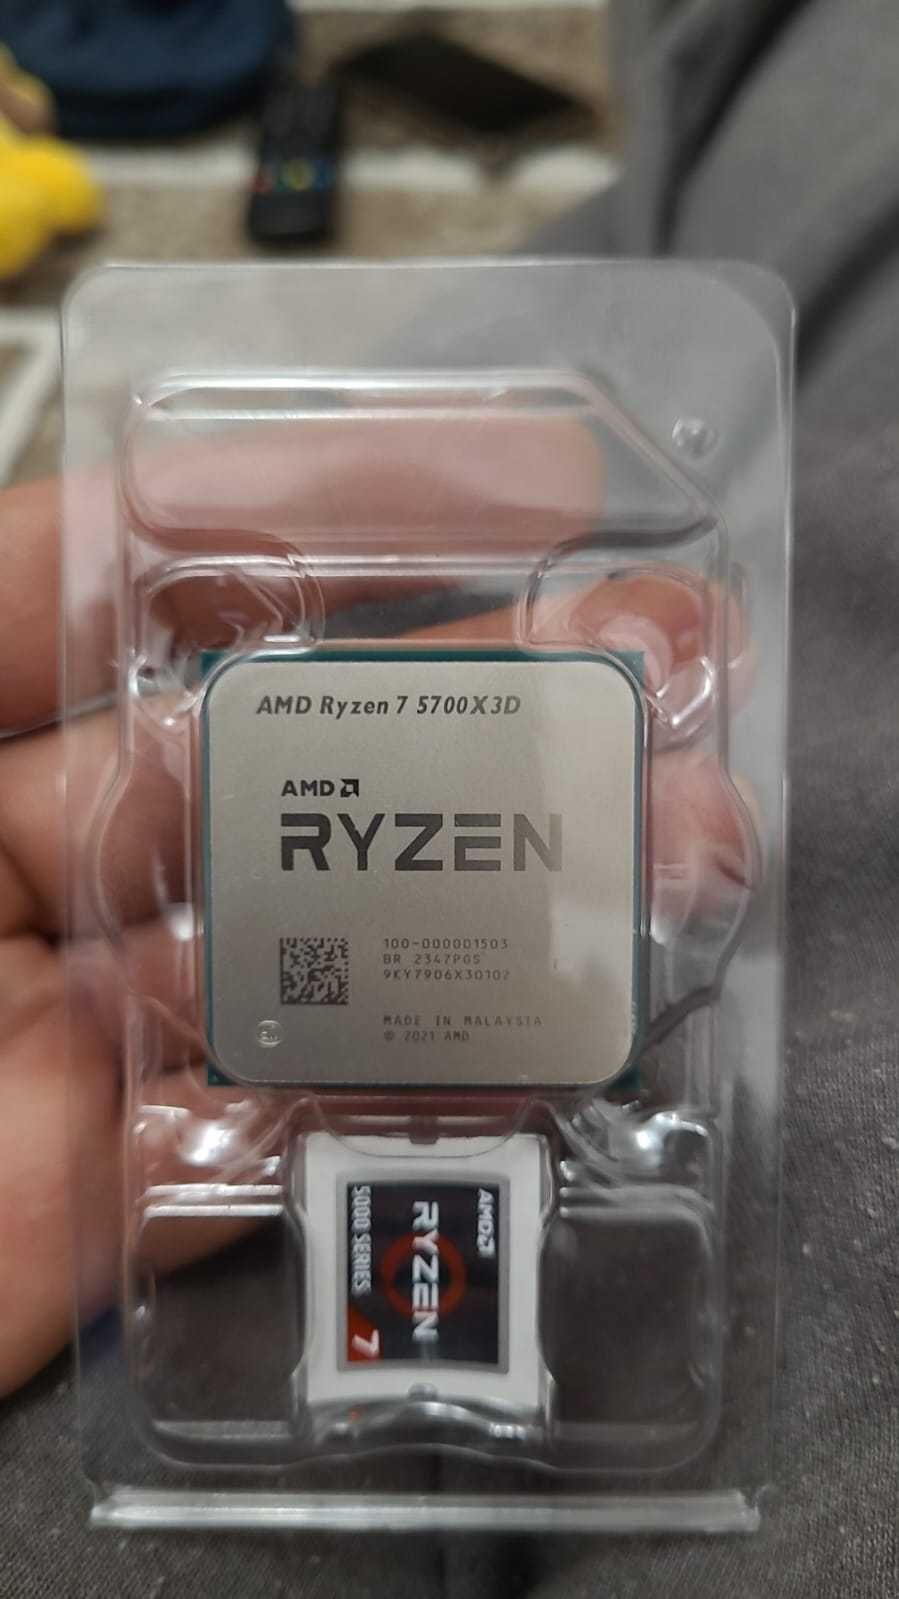 Procesor AMD Ryzen 7 5700X3D 3.0GHz Tray , NOU , garantie amd 3 ani